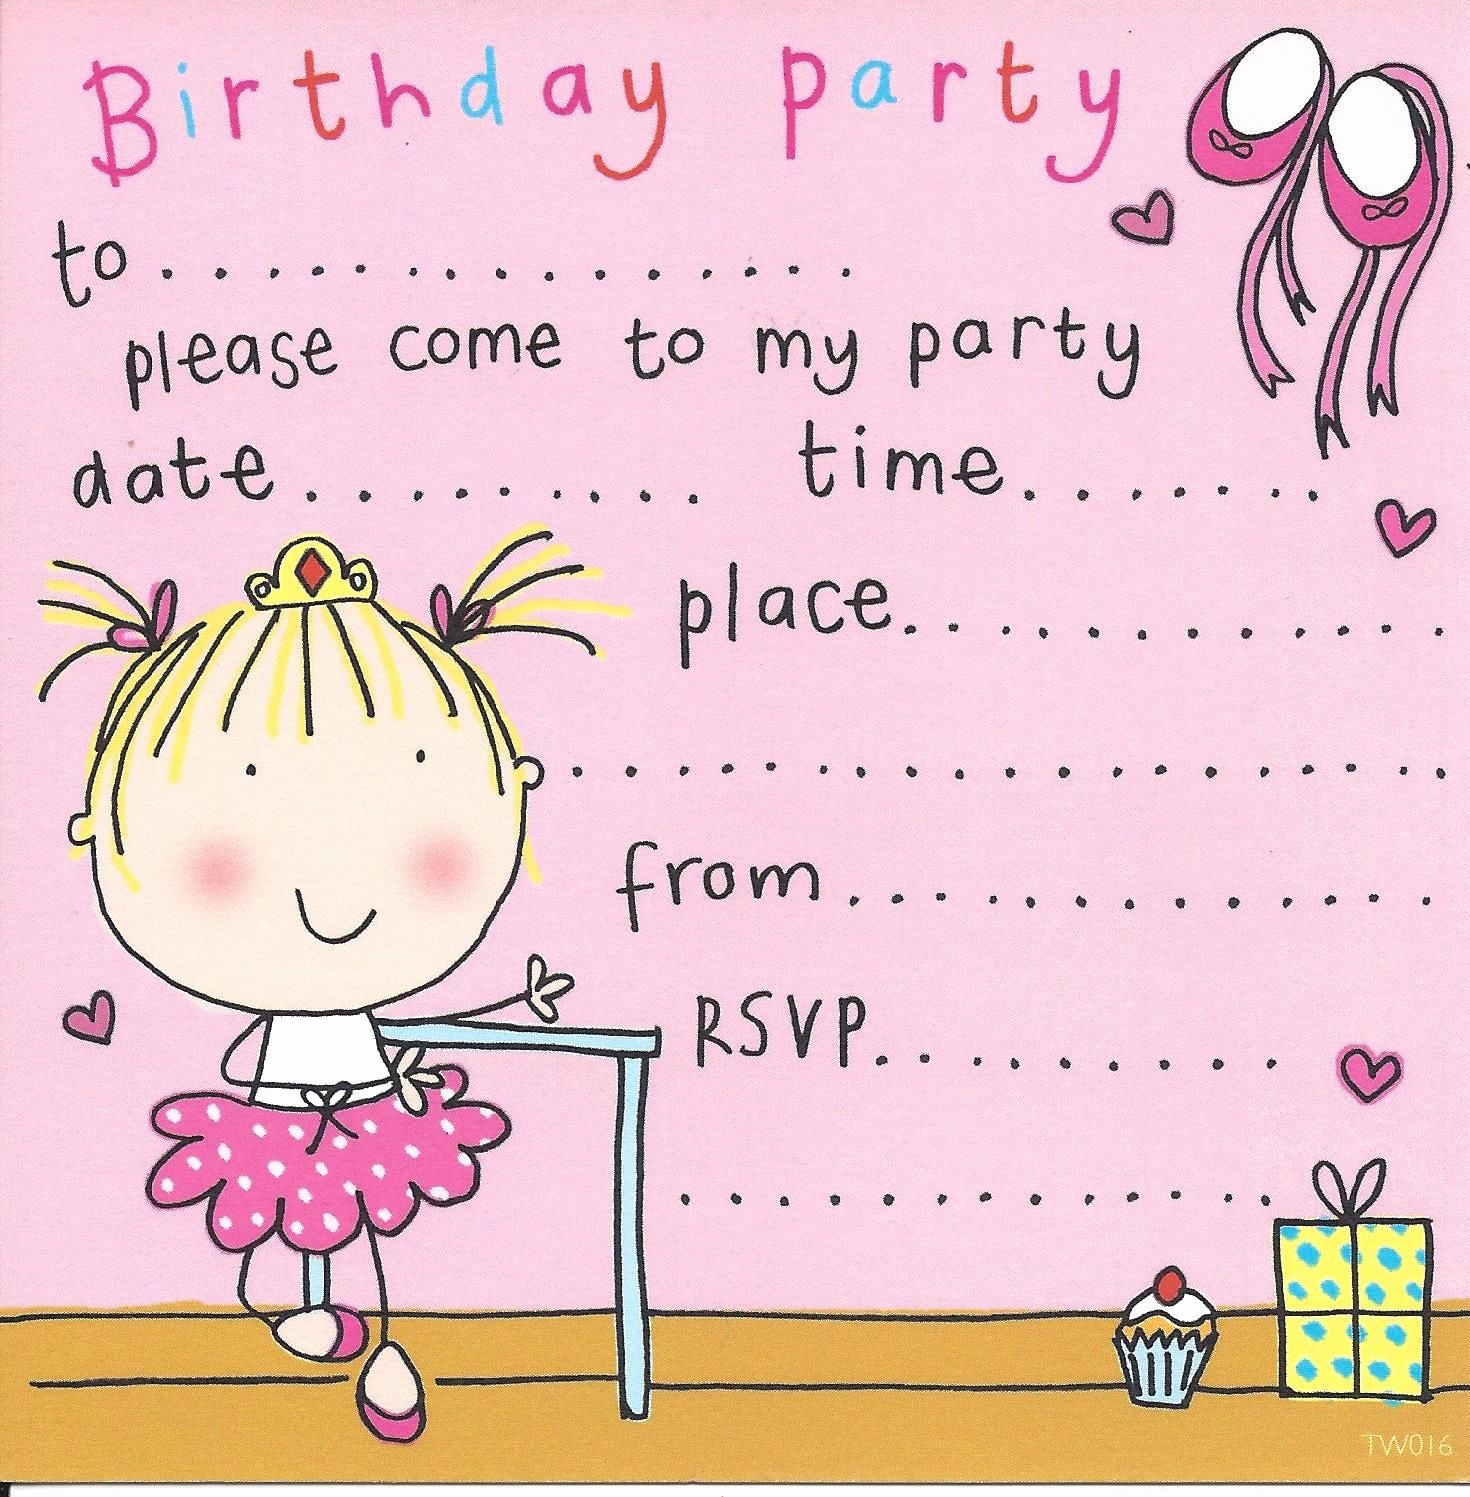 Kids Birthday Party Invites Templates Fresh Party Invitations Birthday Party Invitations Kids Party